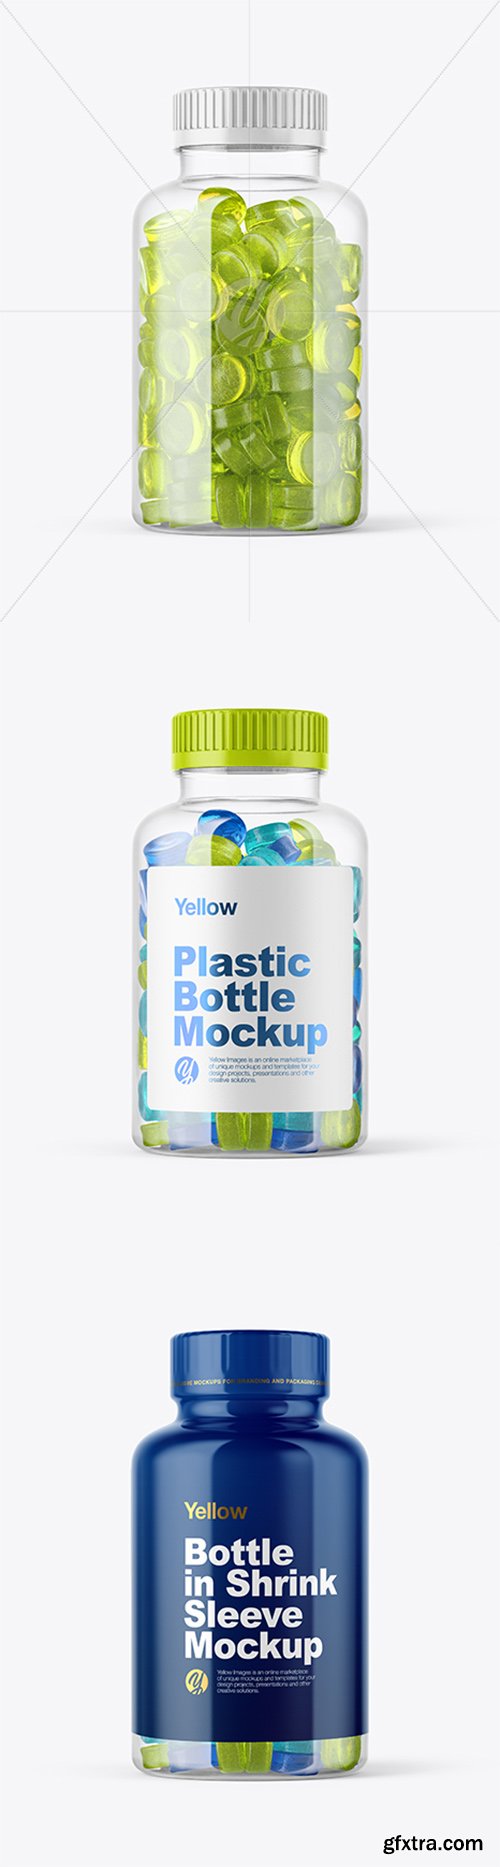 Plastic Bottle with Gummies Mockup 38489